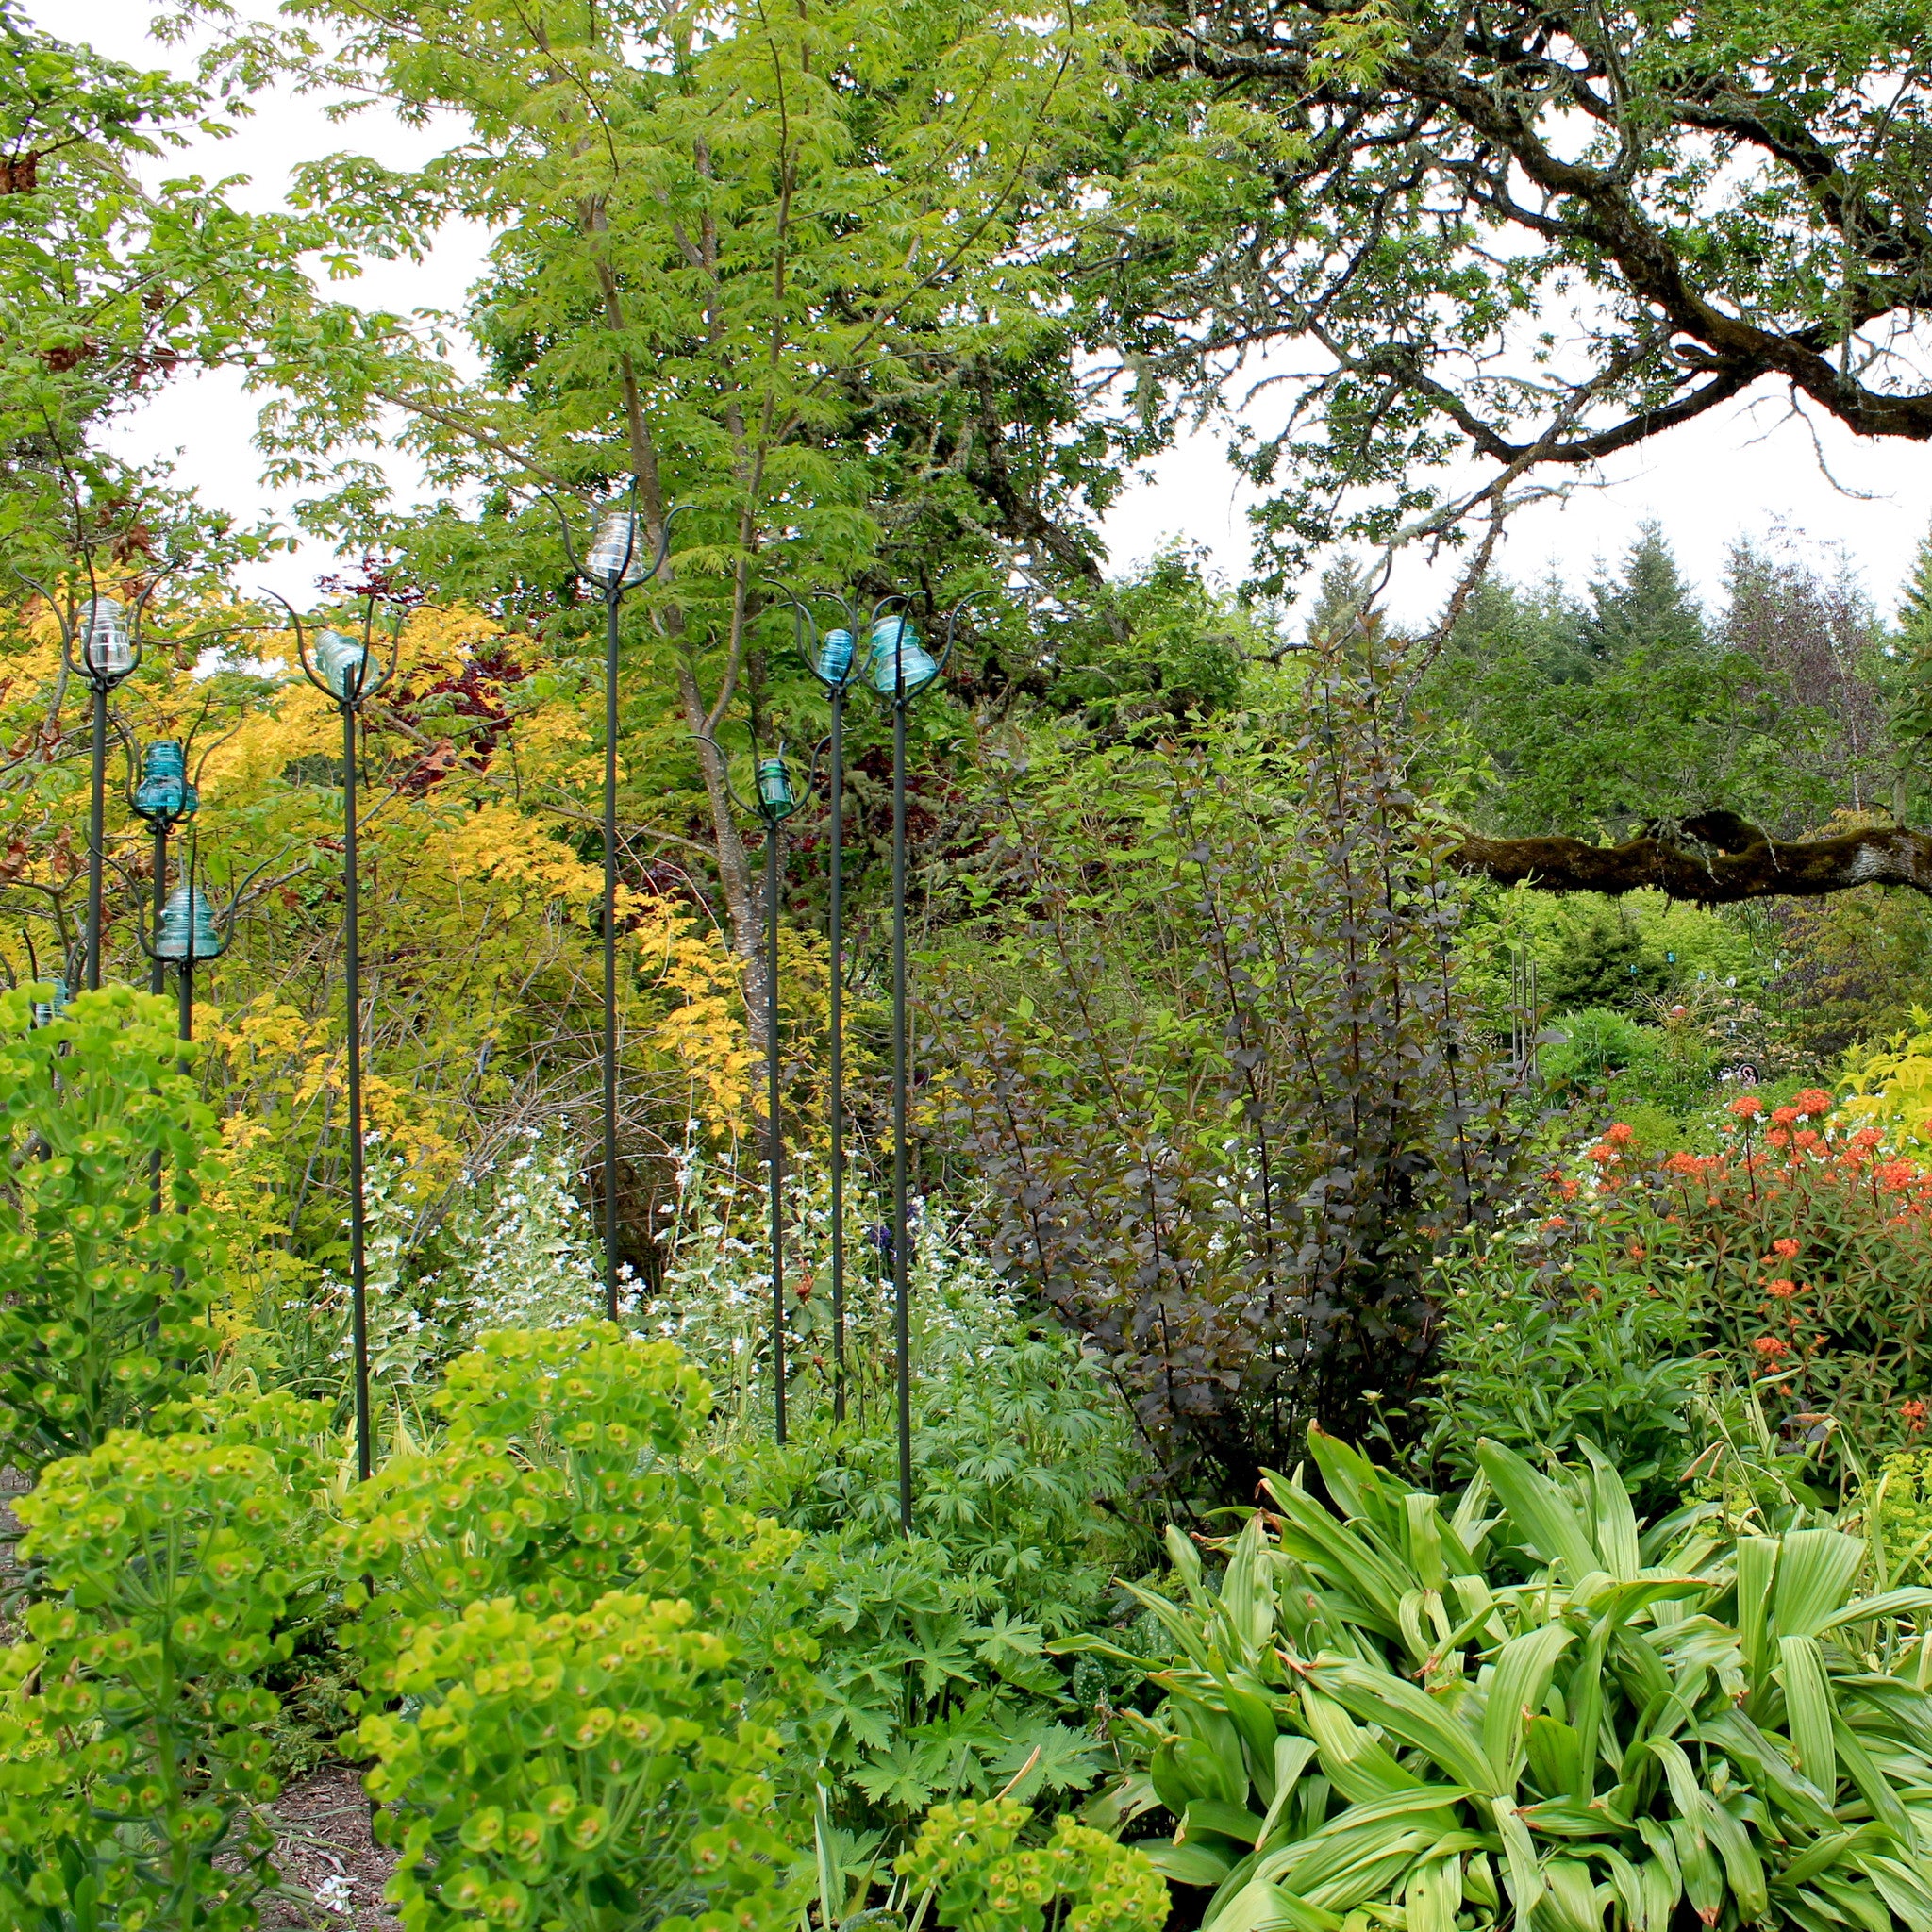 Tanakaea radicans, Japanese Foam Flower – Dancing Oaks Nursery and Gardens